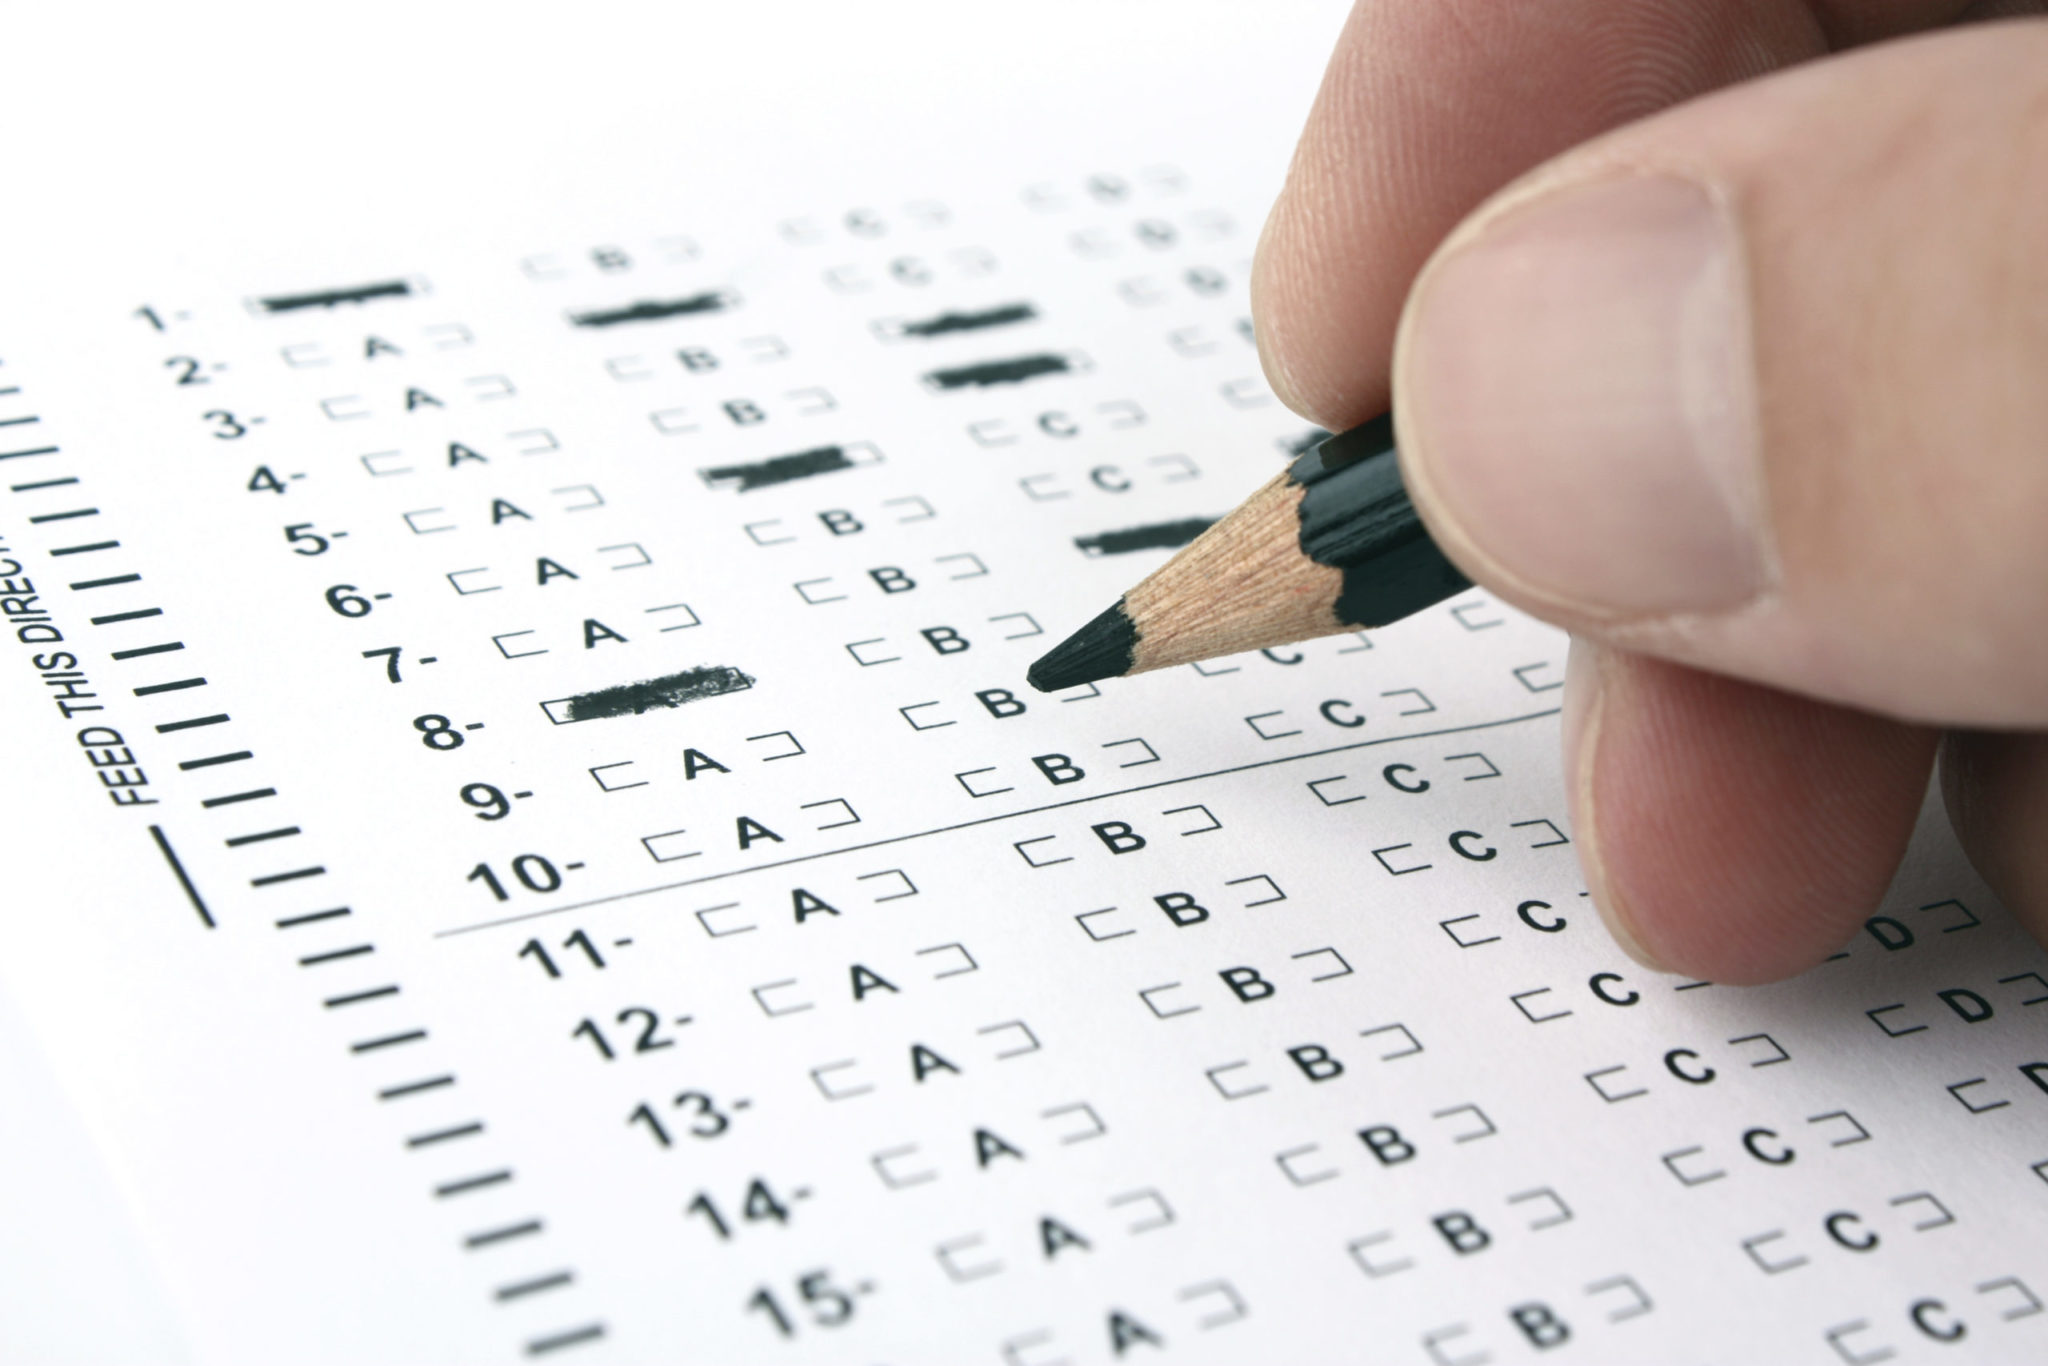 ADHD ADD Grades Test Scores Scholarship